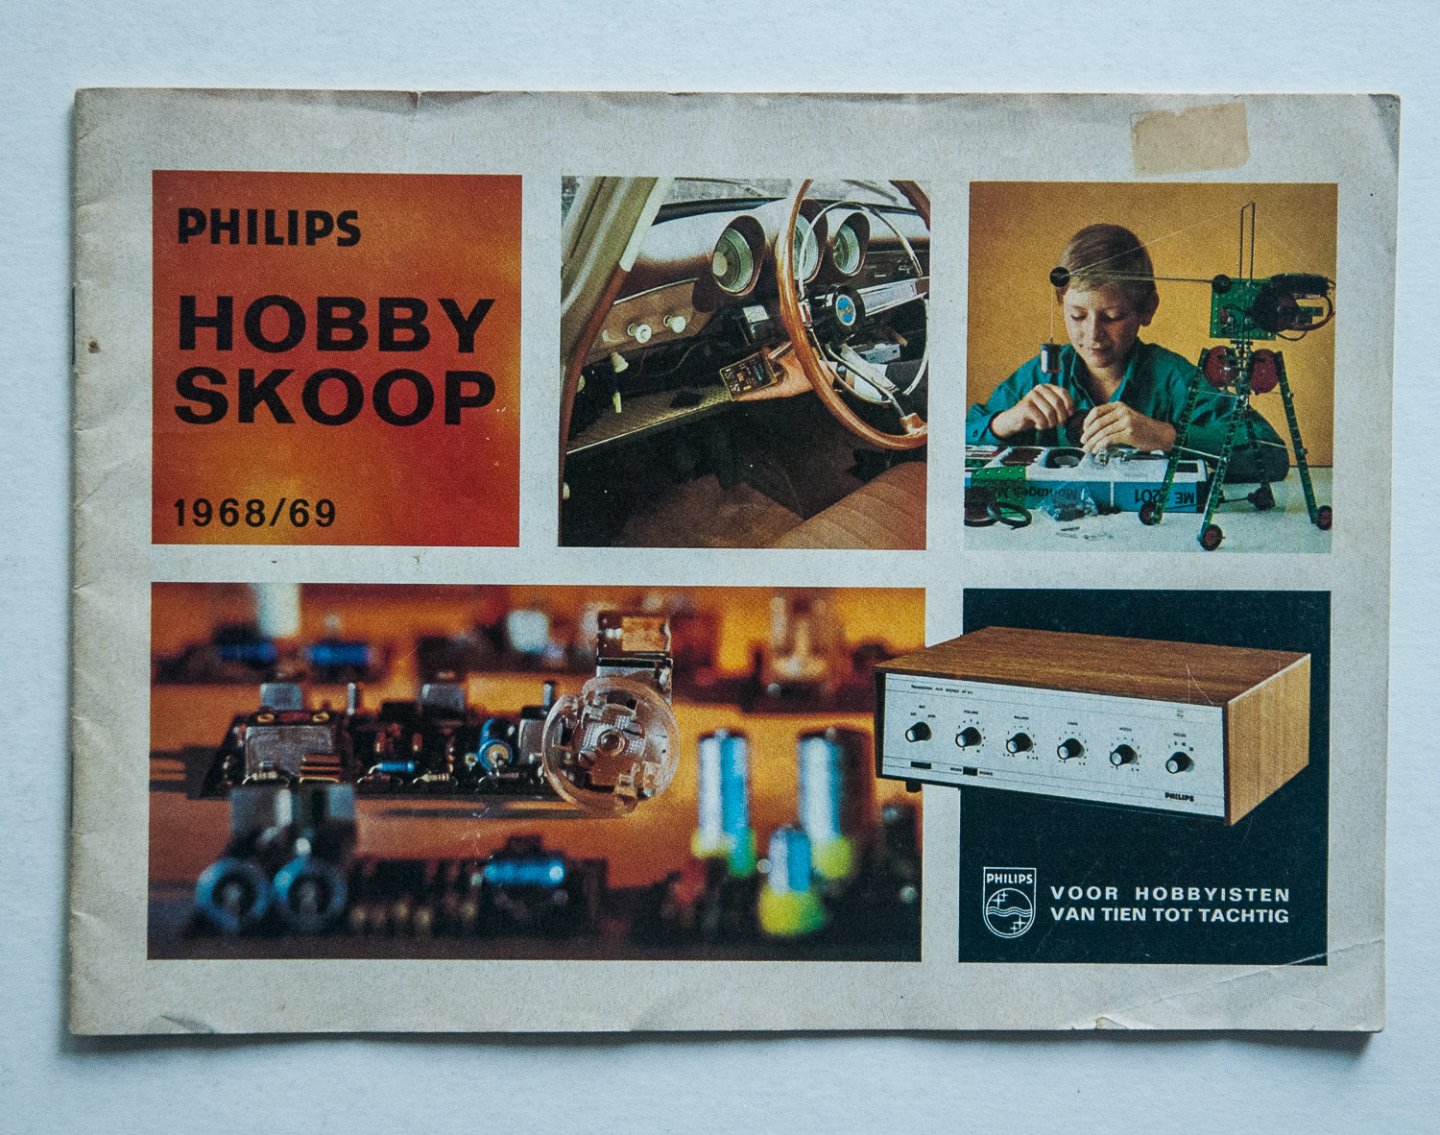 Philips Gloeilampenfabrieken Nederland n.v., Eindhoven - Philips  Hobbyskoop 1968/69